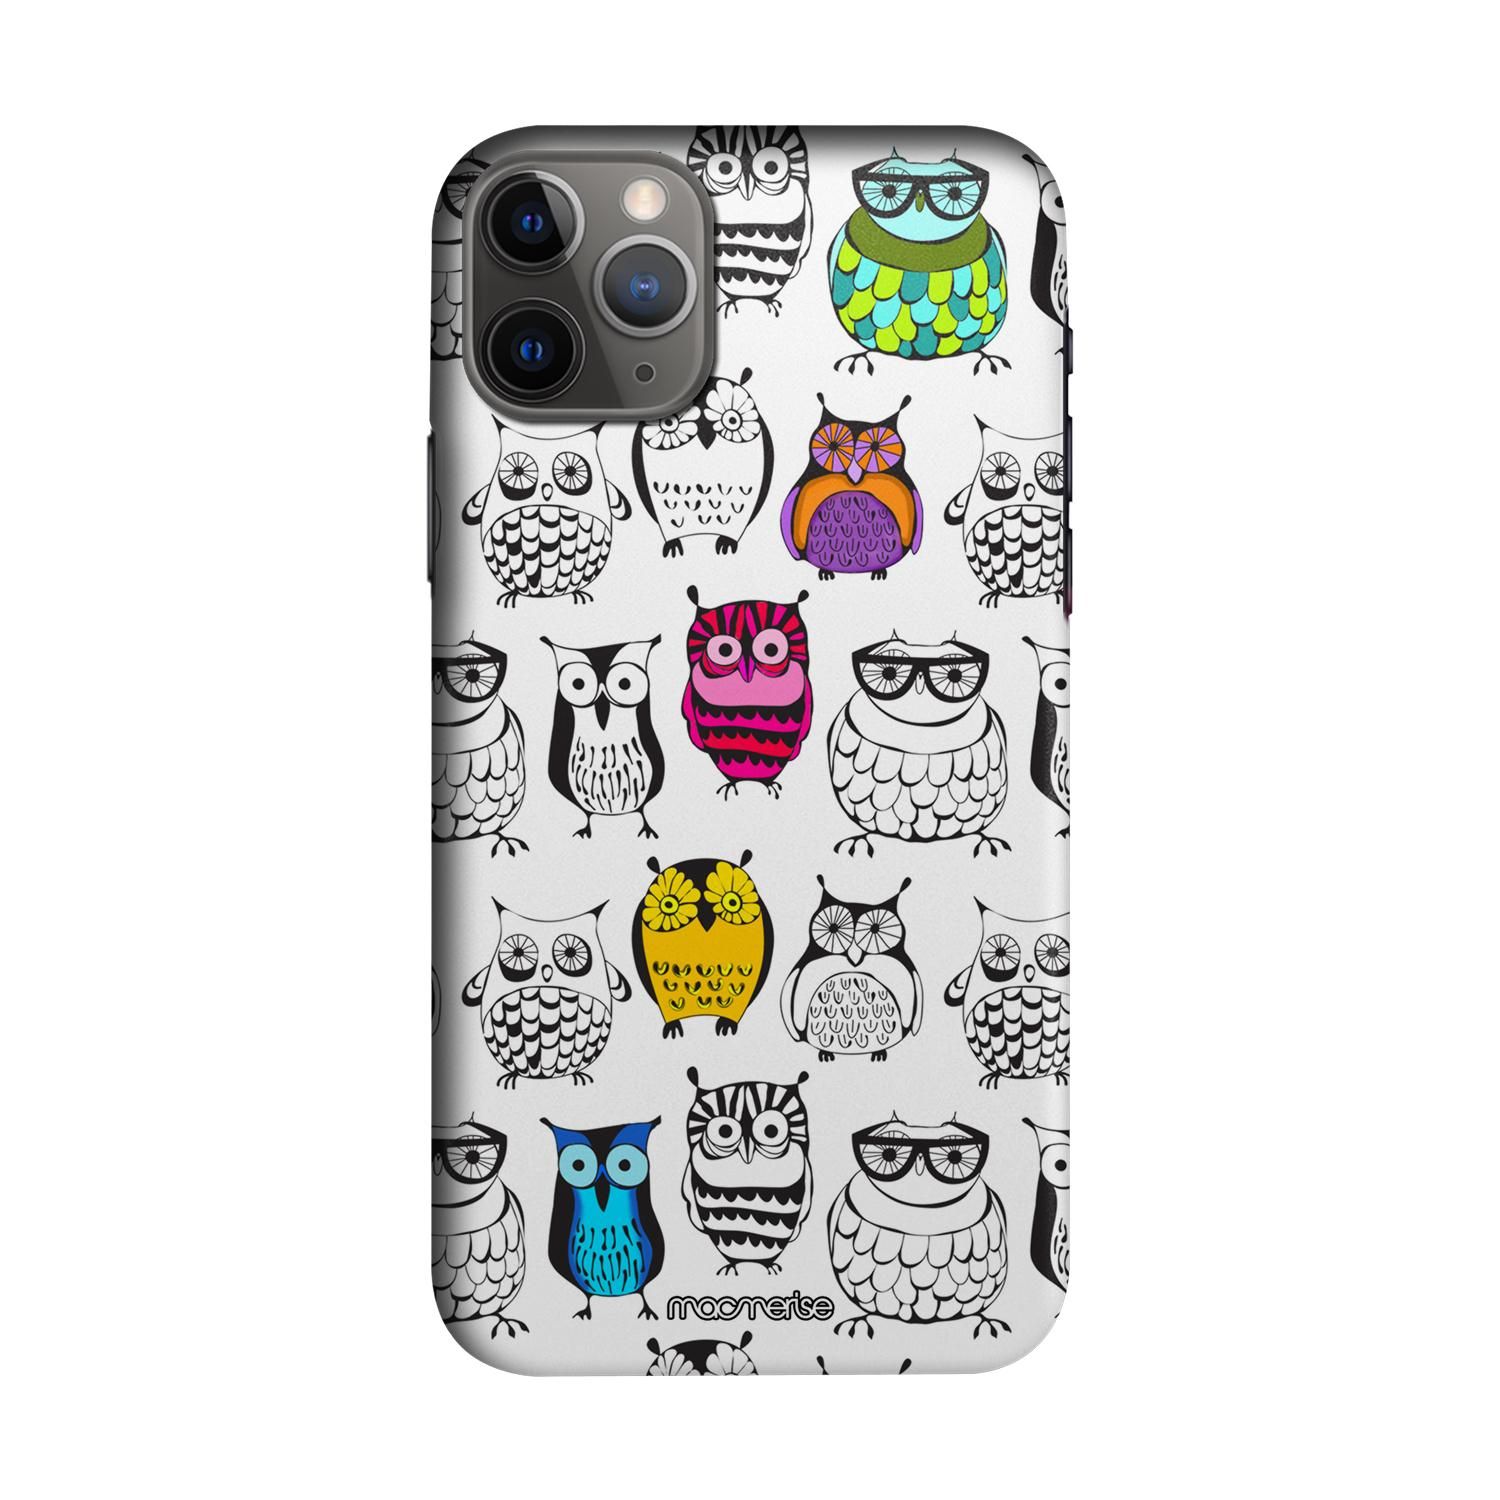 Buy Owl Art - Sleek Phone Case for iPhone 11 Pro Online